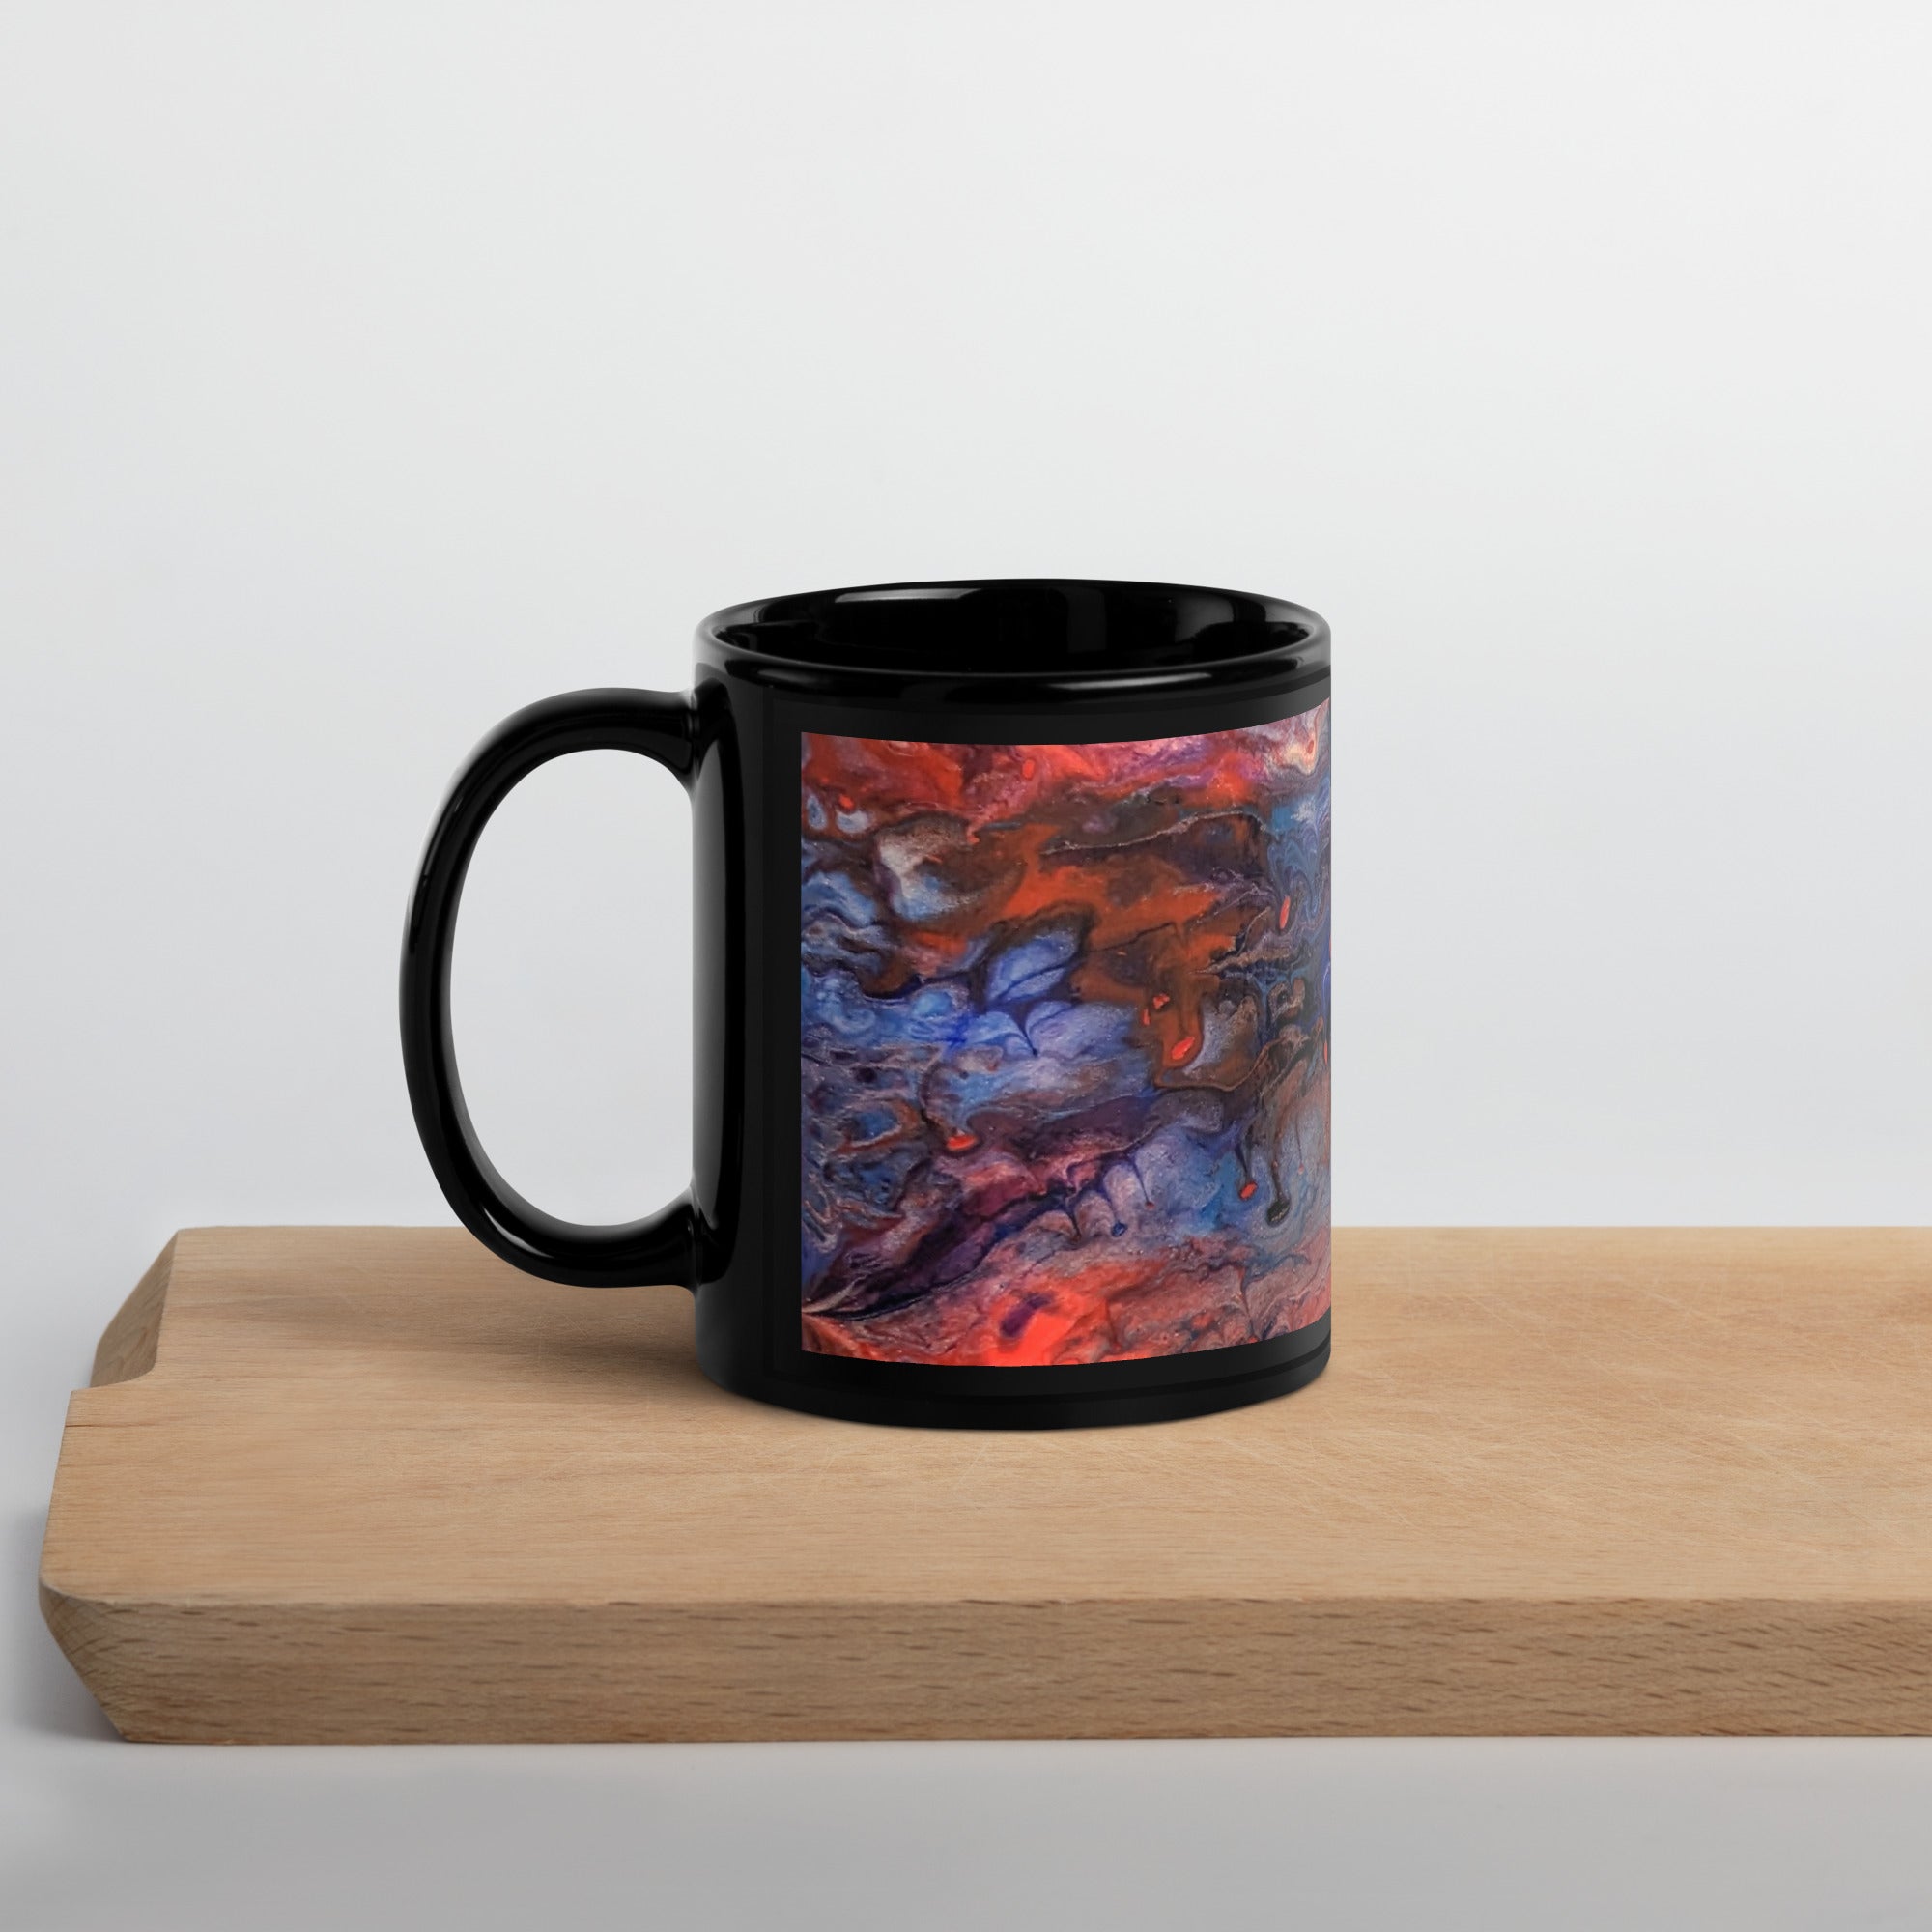 Falling Sky Sunset Ceramic Mug, Glossy Mug, Fluid Art, Acrylic Pour Painting, Abstract Art, Gift, Paint Mug, Coffee Cup, Drinkware